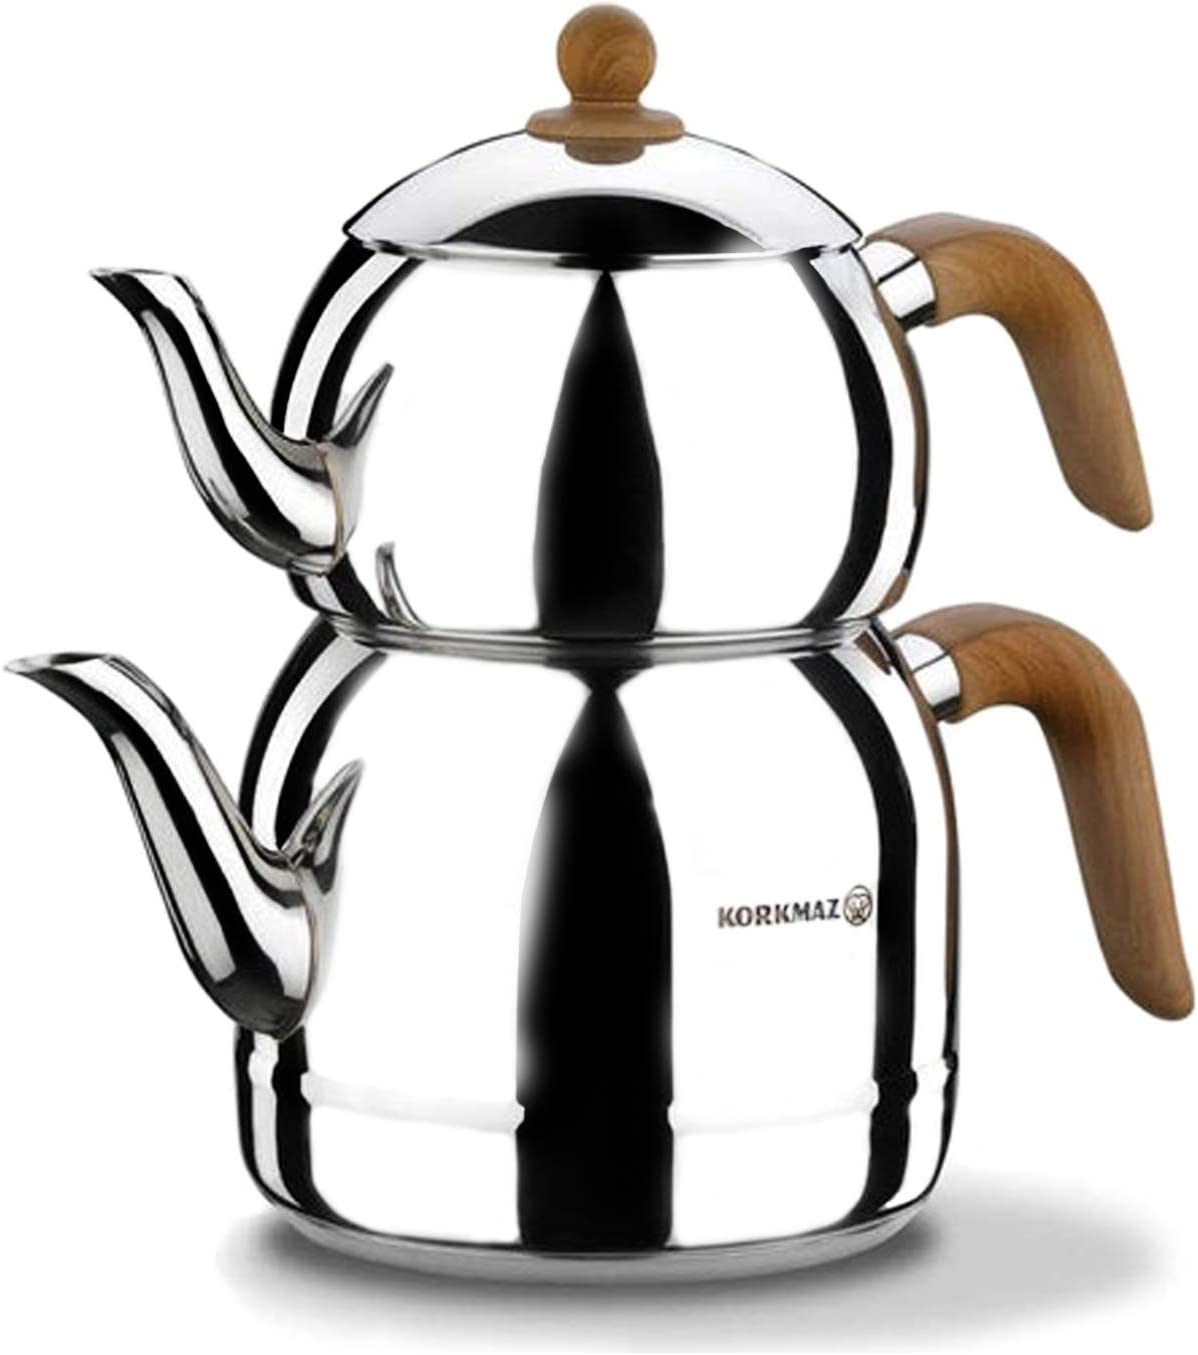 Korkmaz Caydanlik Takimi Tea Set Teapot Stainless Steel Set of 4